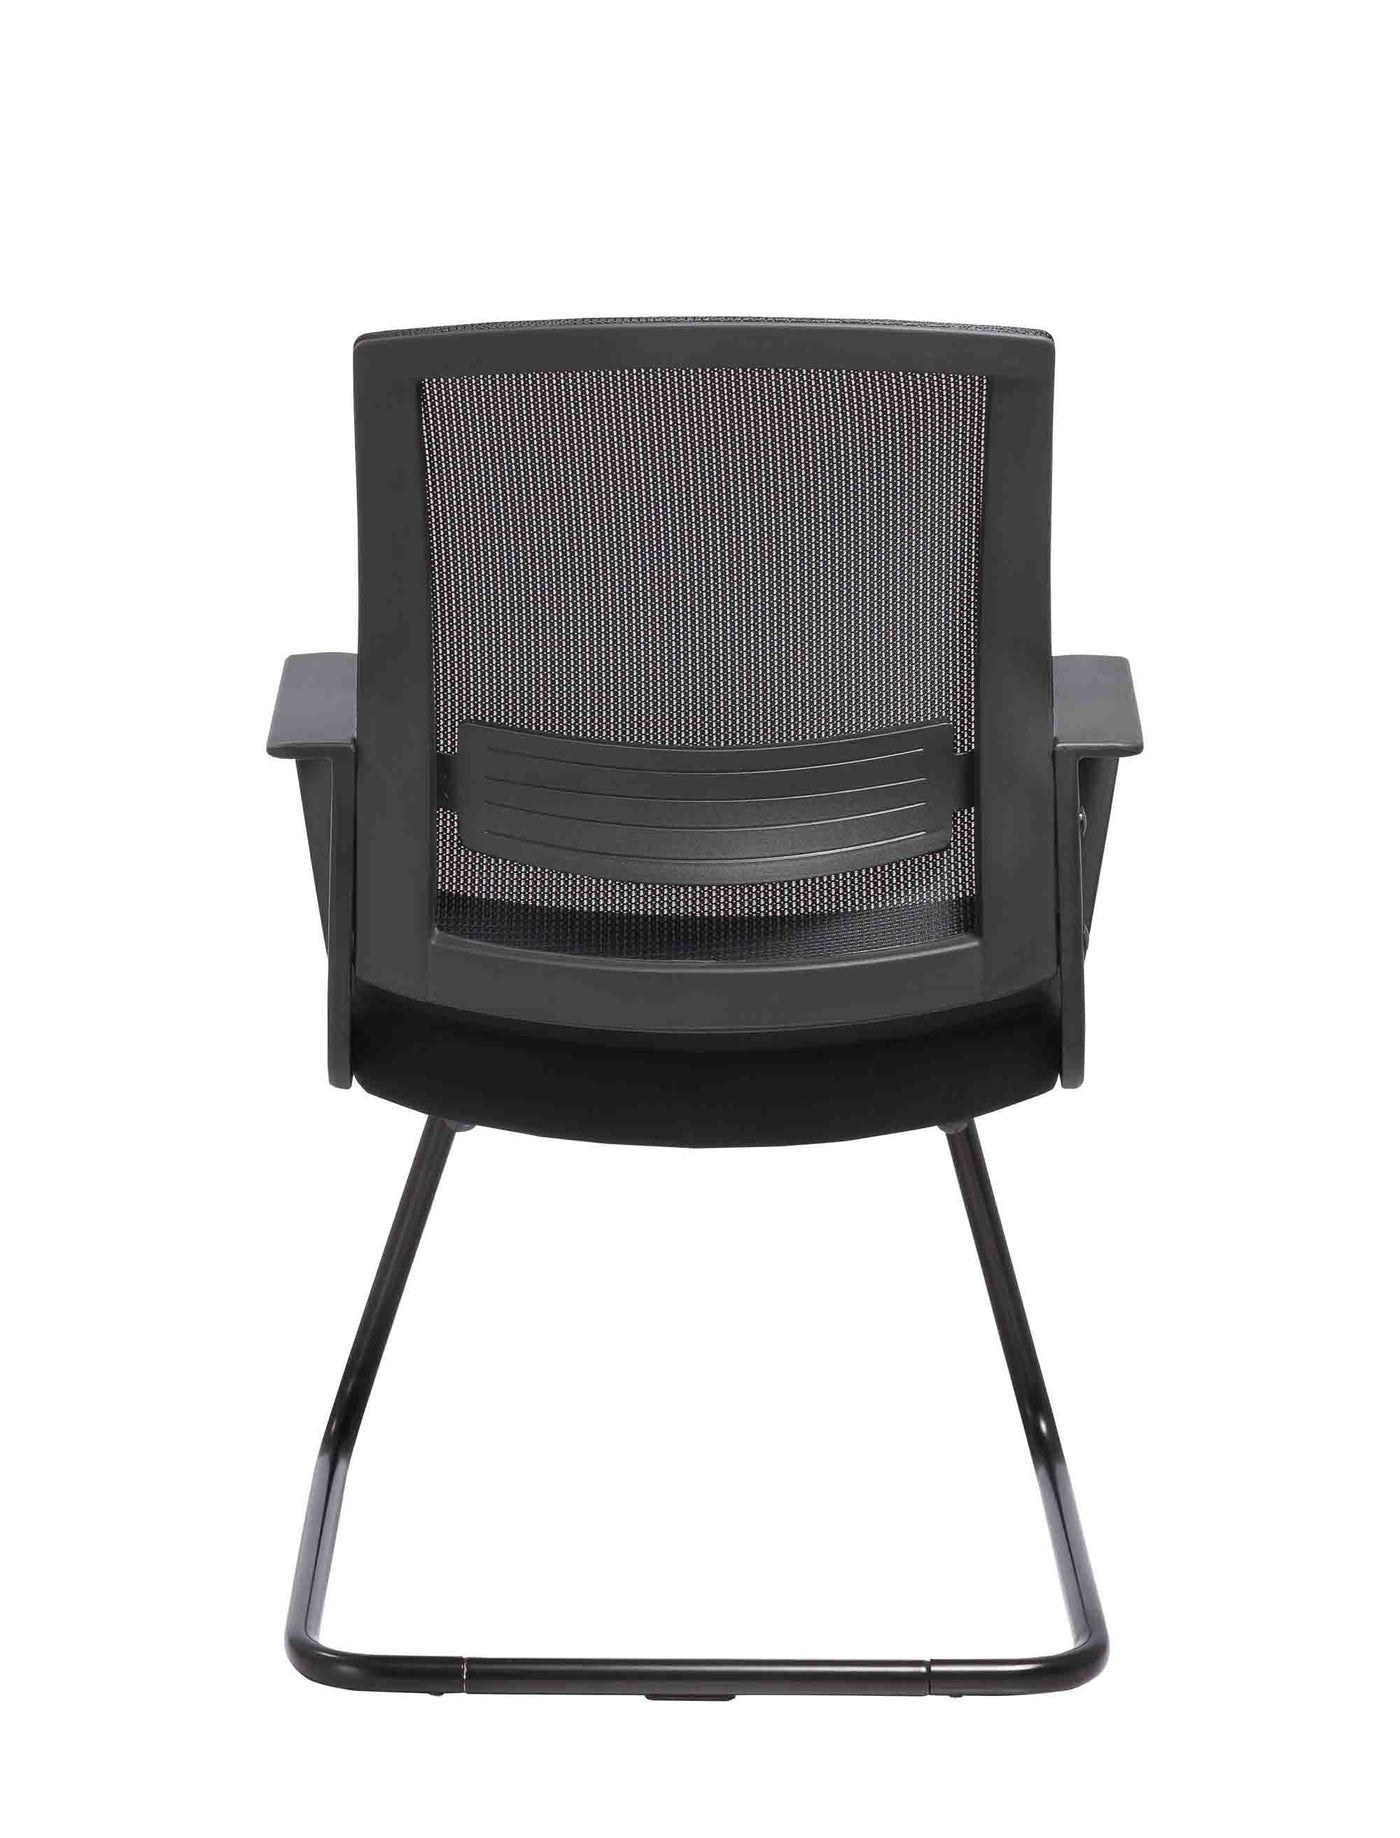 Low Back Mesh Ergonomic Office Chair - Black